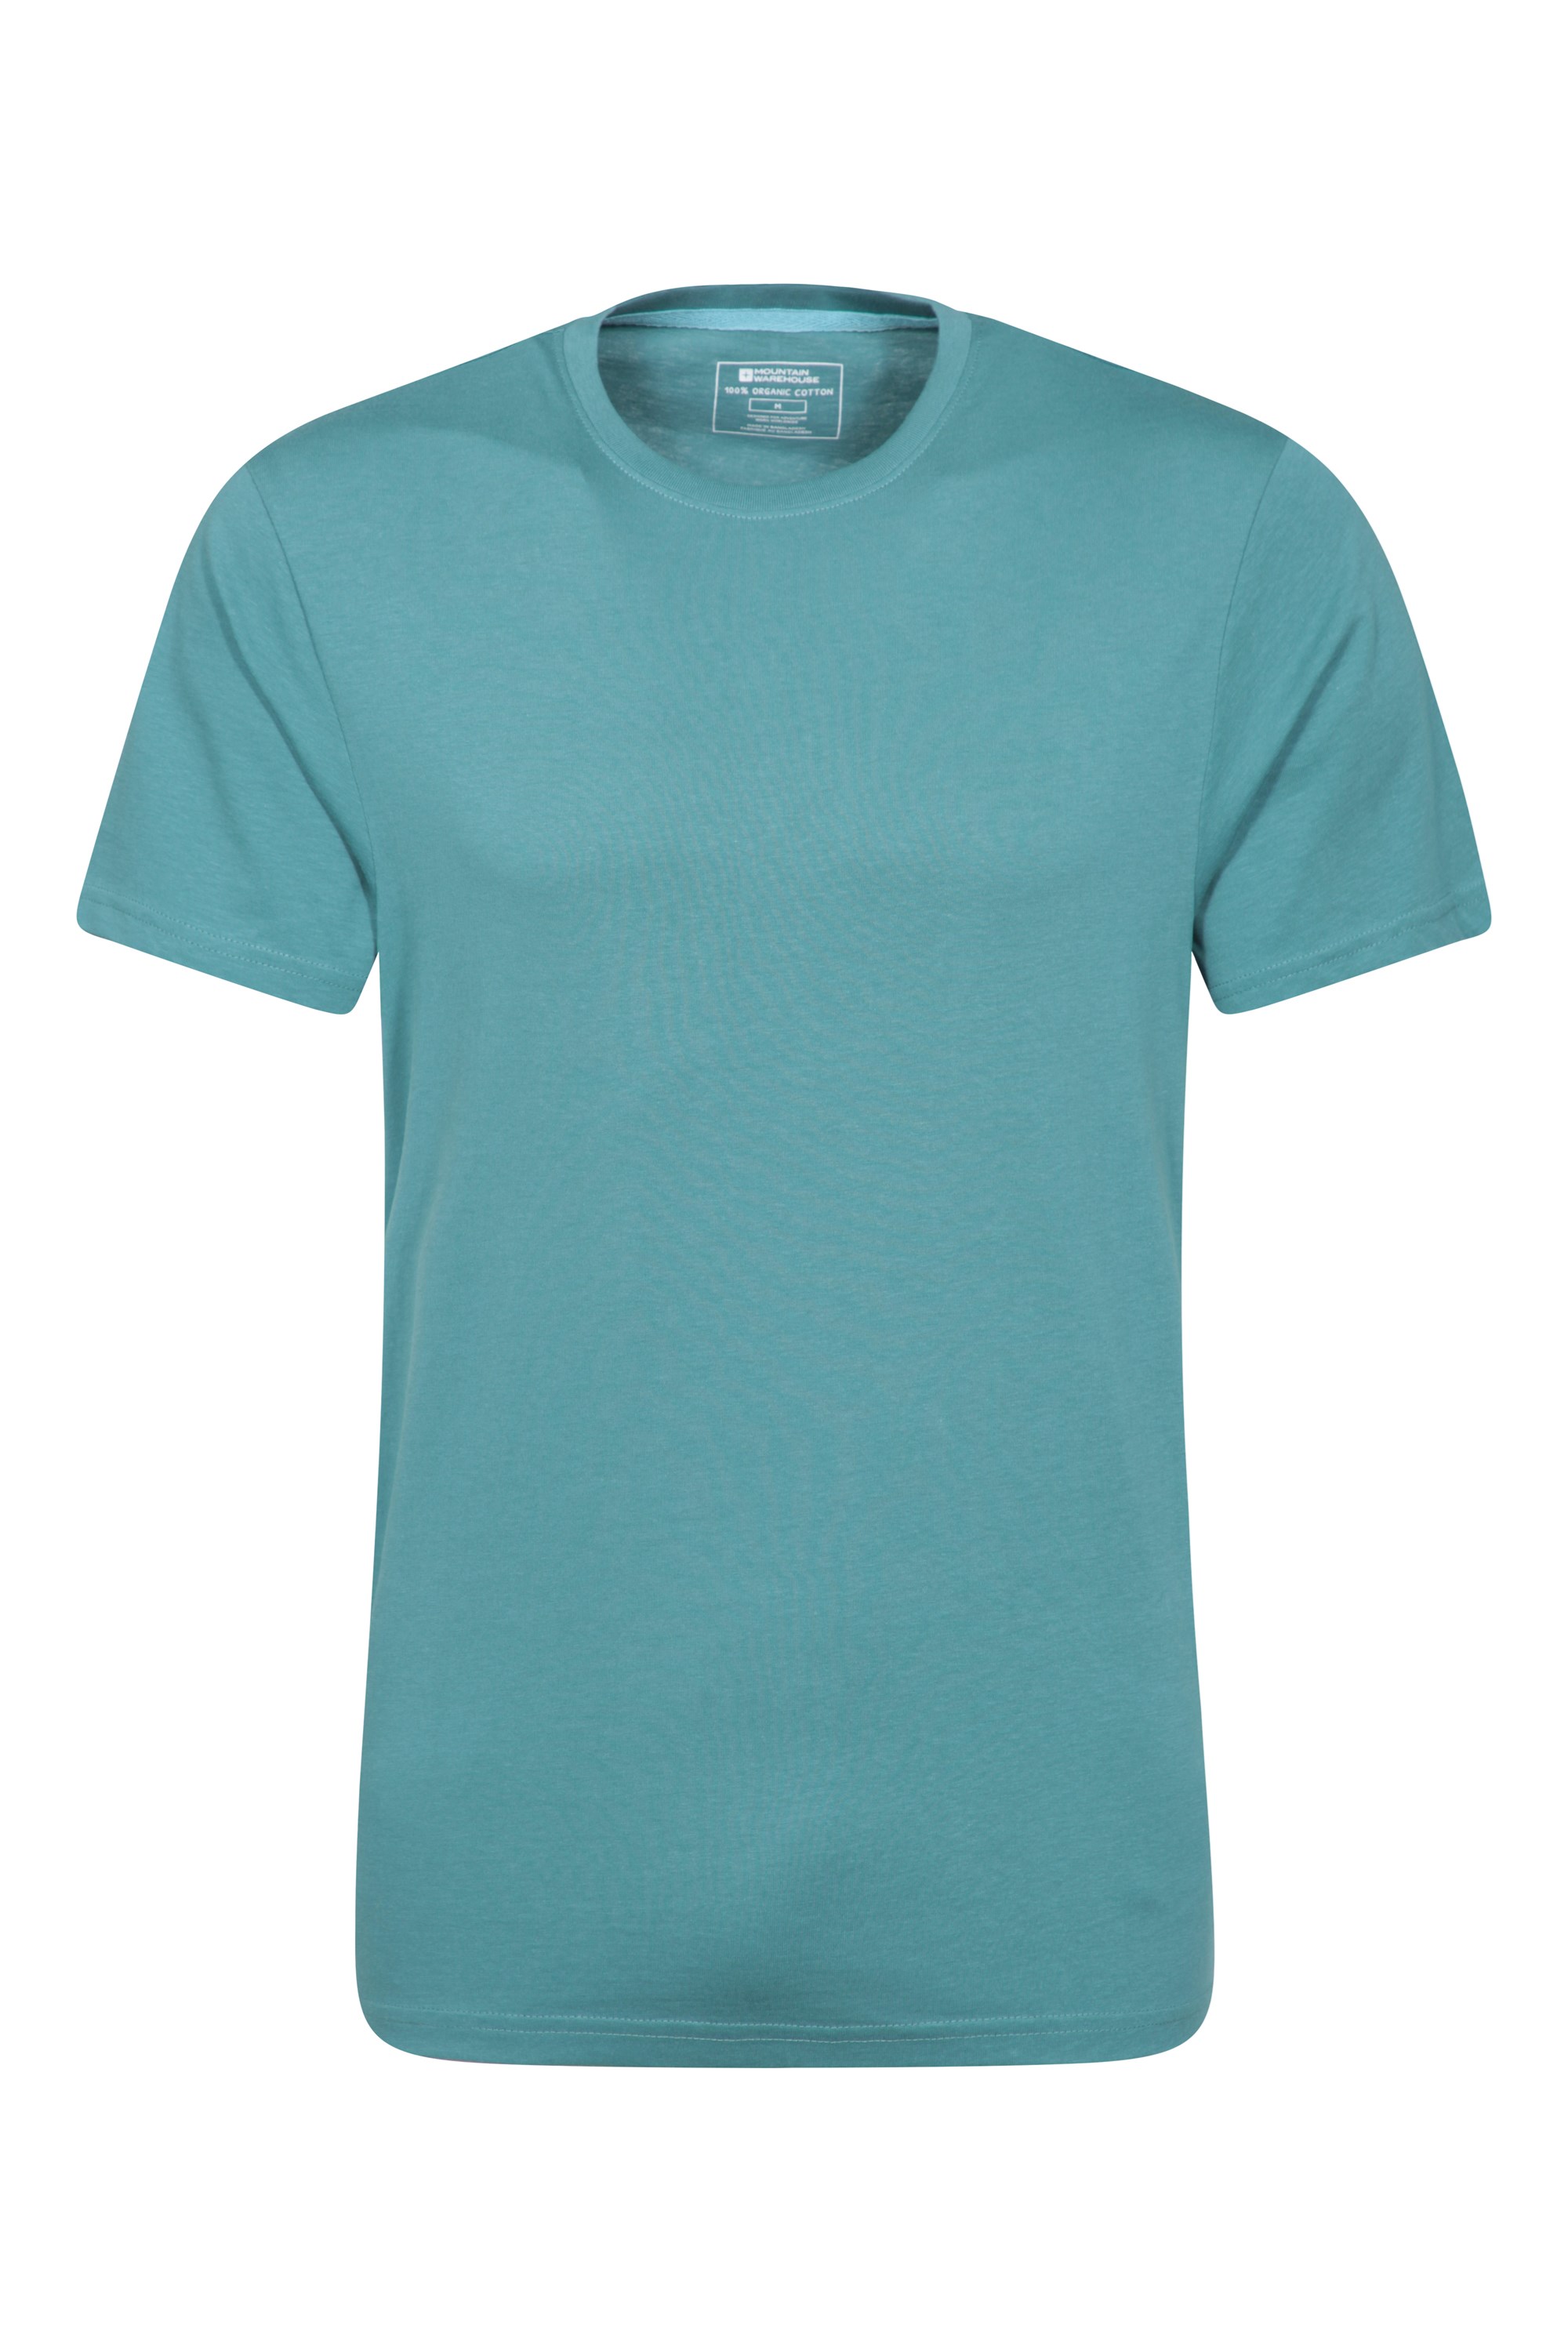 Eden Mens Organic Plain T-Shirt - Turquoise